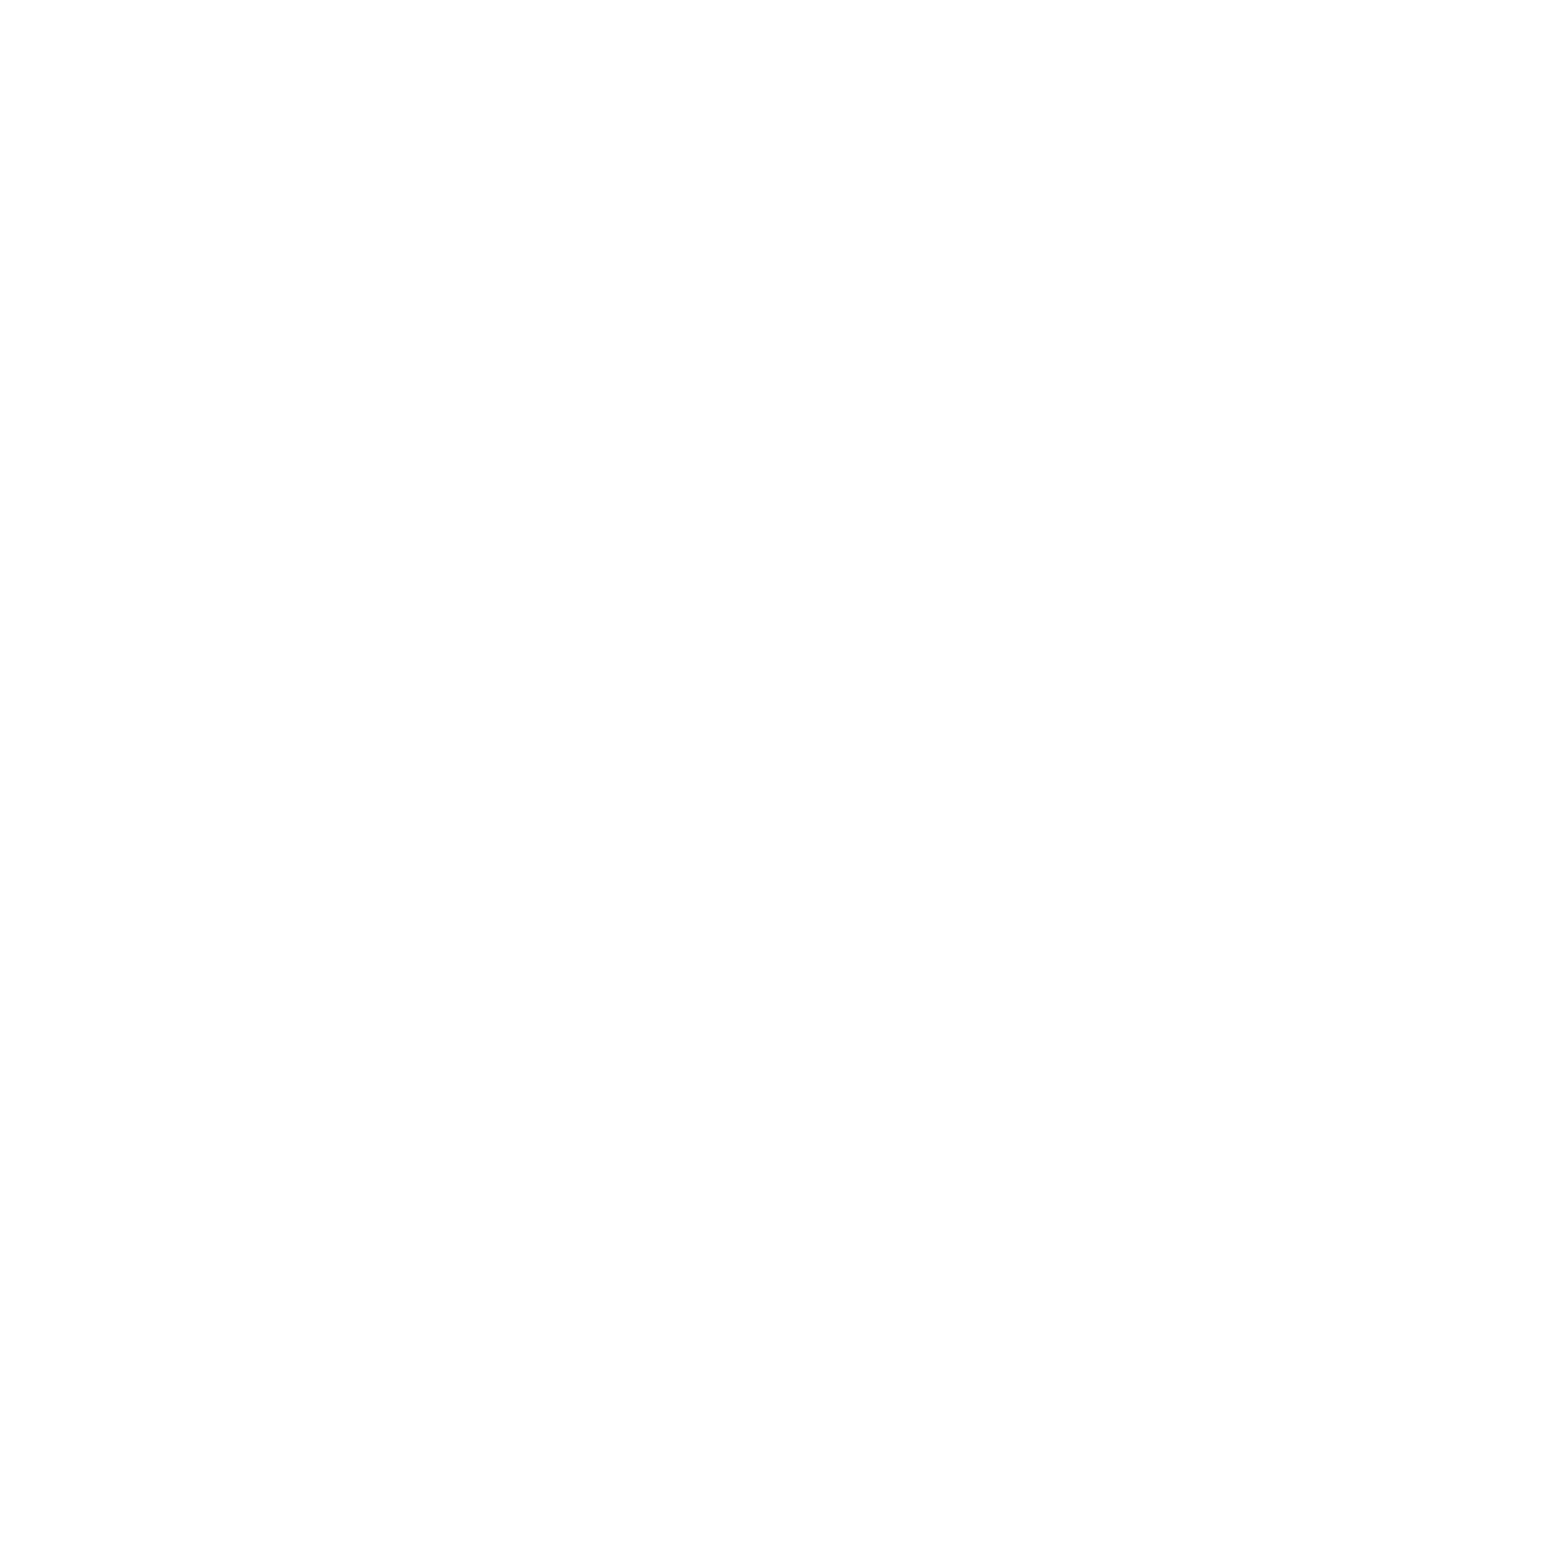 Midland States Bancorp logo for dark backgrounds (transparent PNG)